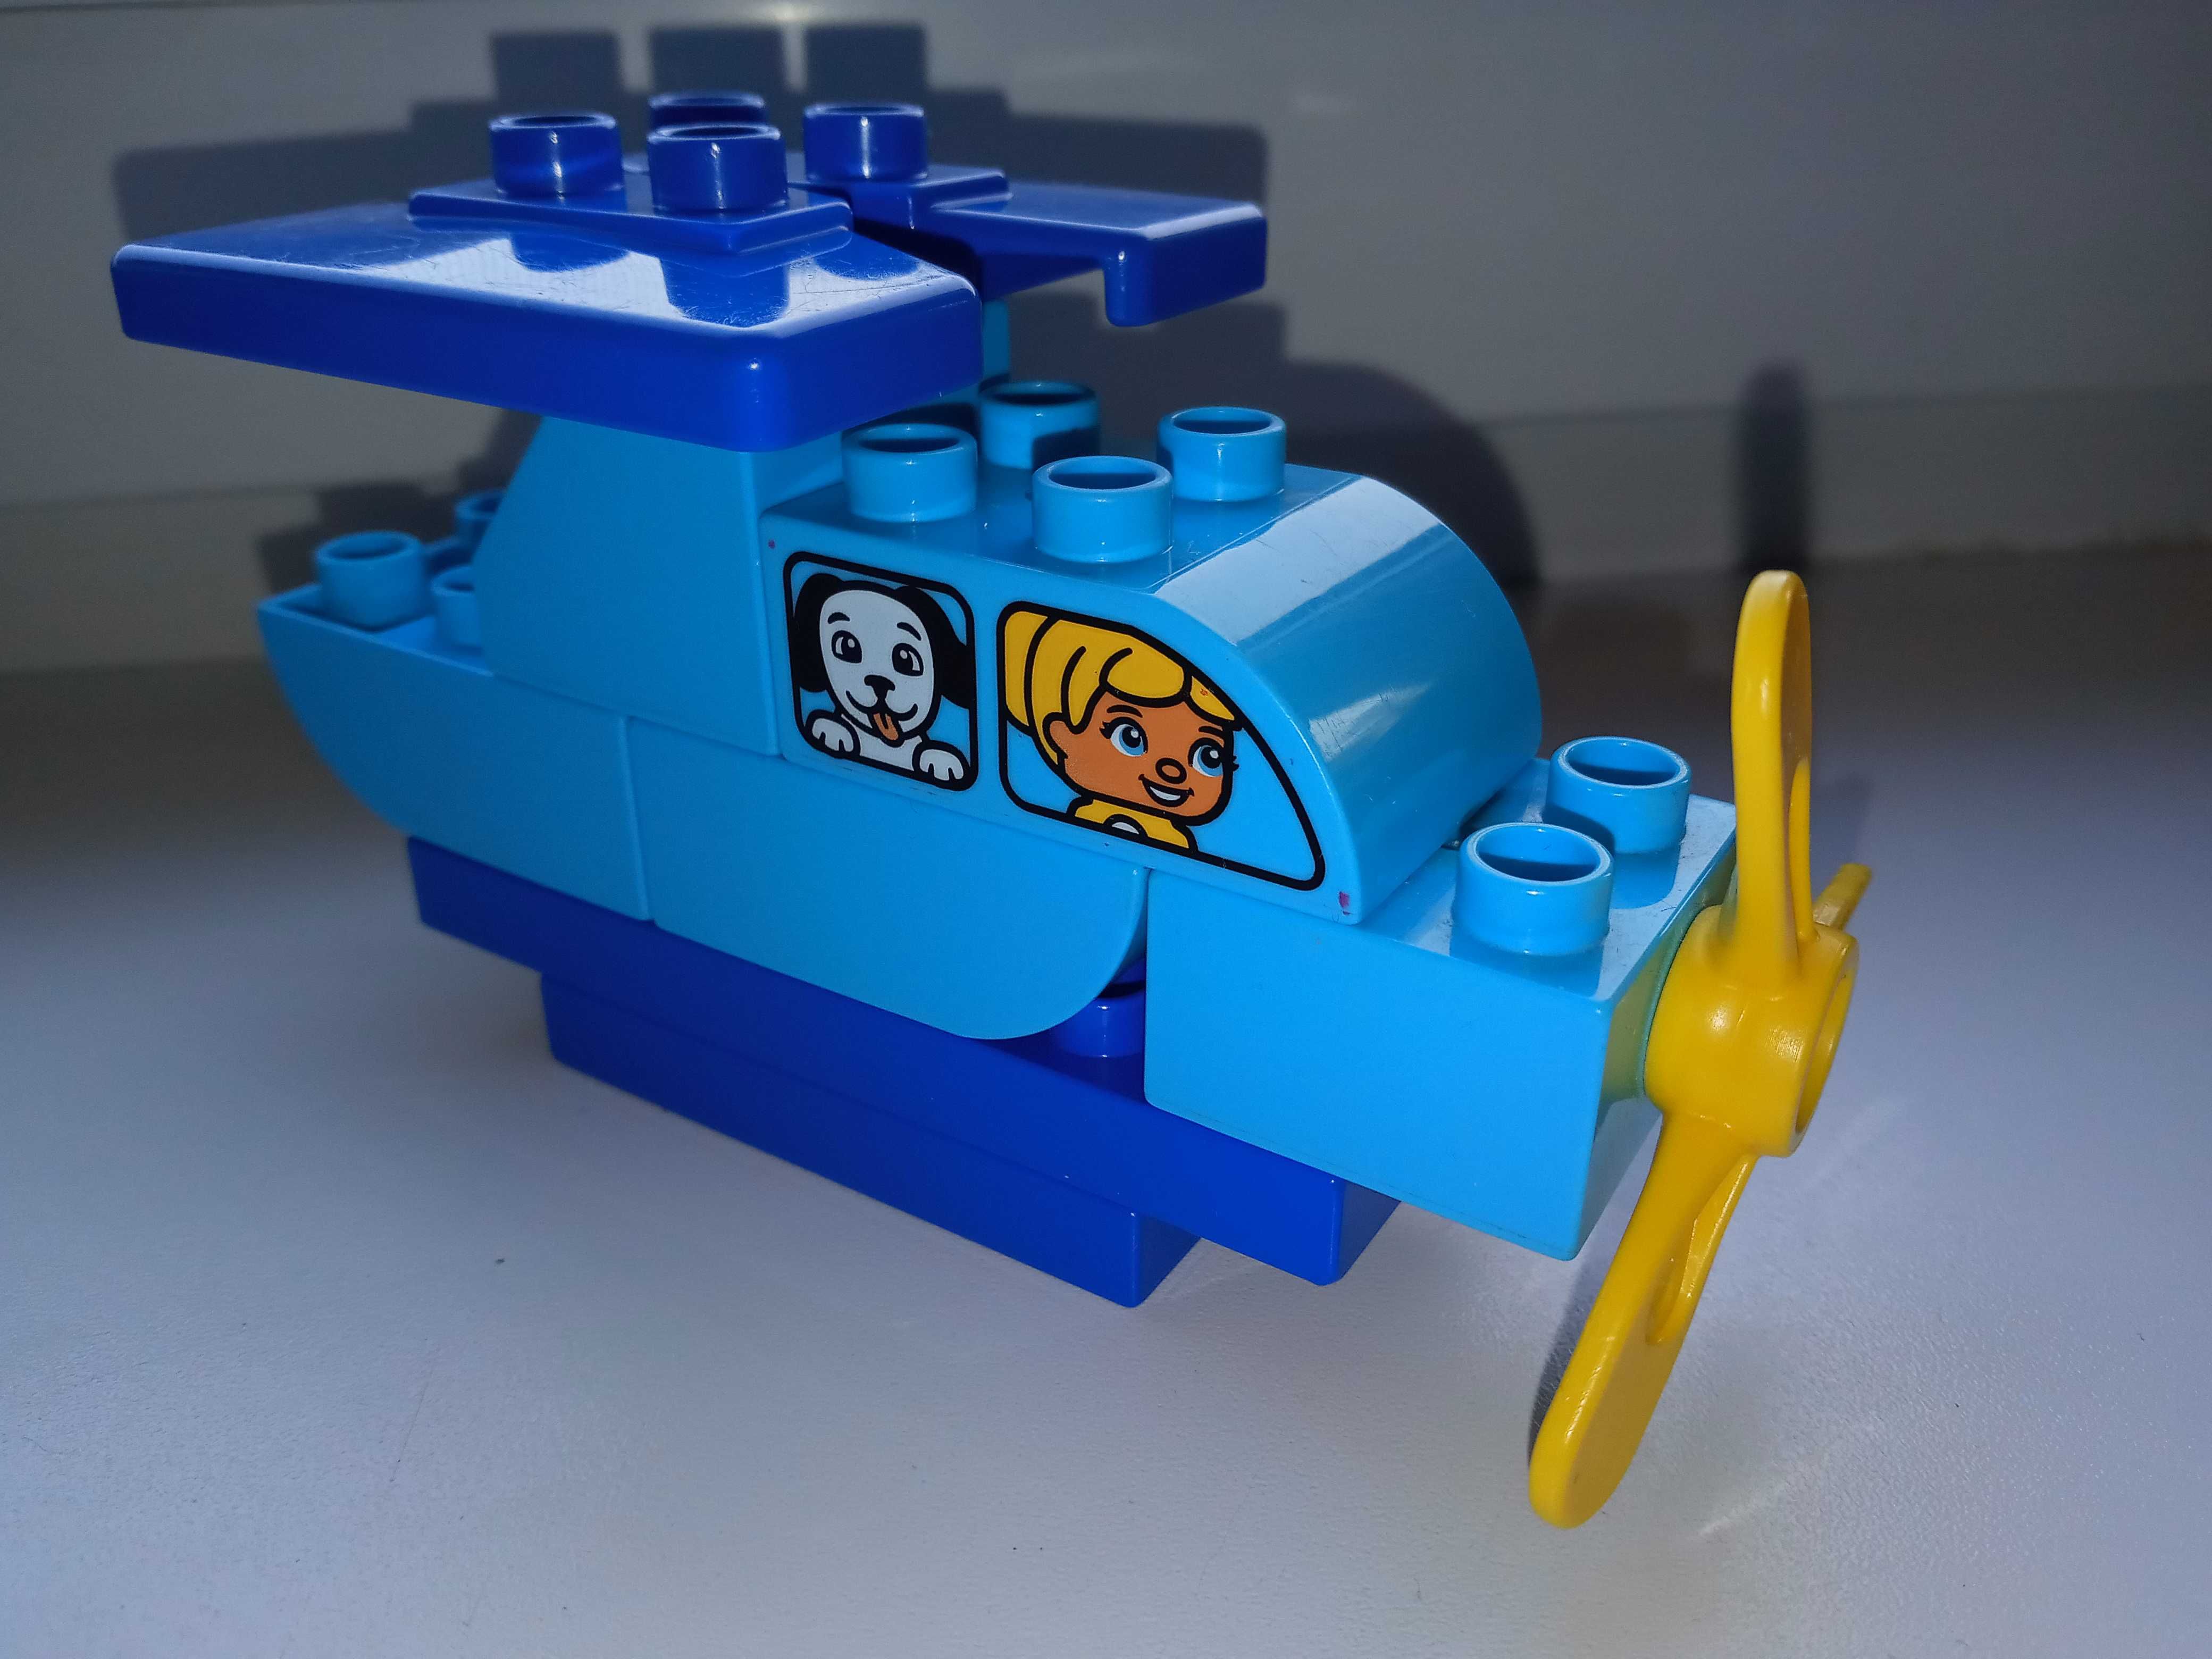 Lego duplo 10849 samolot, łódka